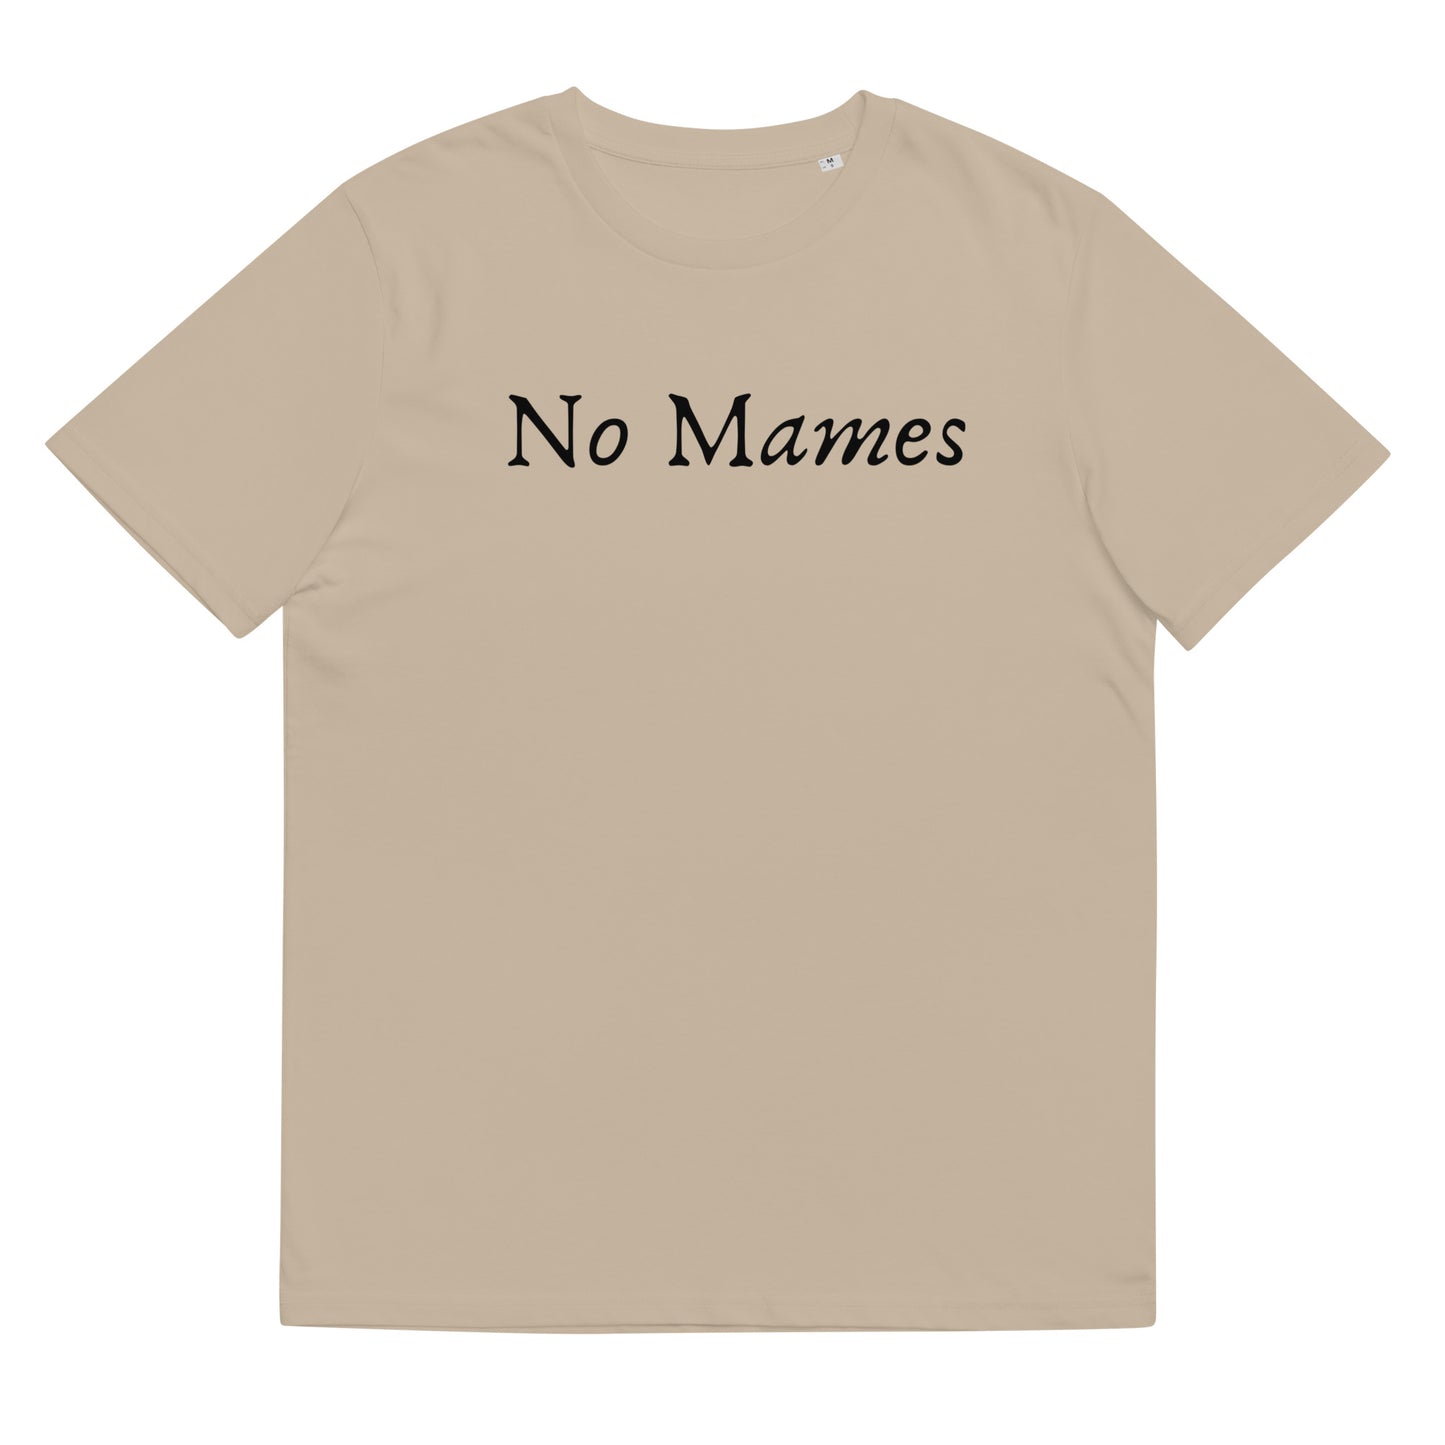 No mames Spanish organic cotton t-shirt